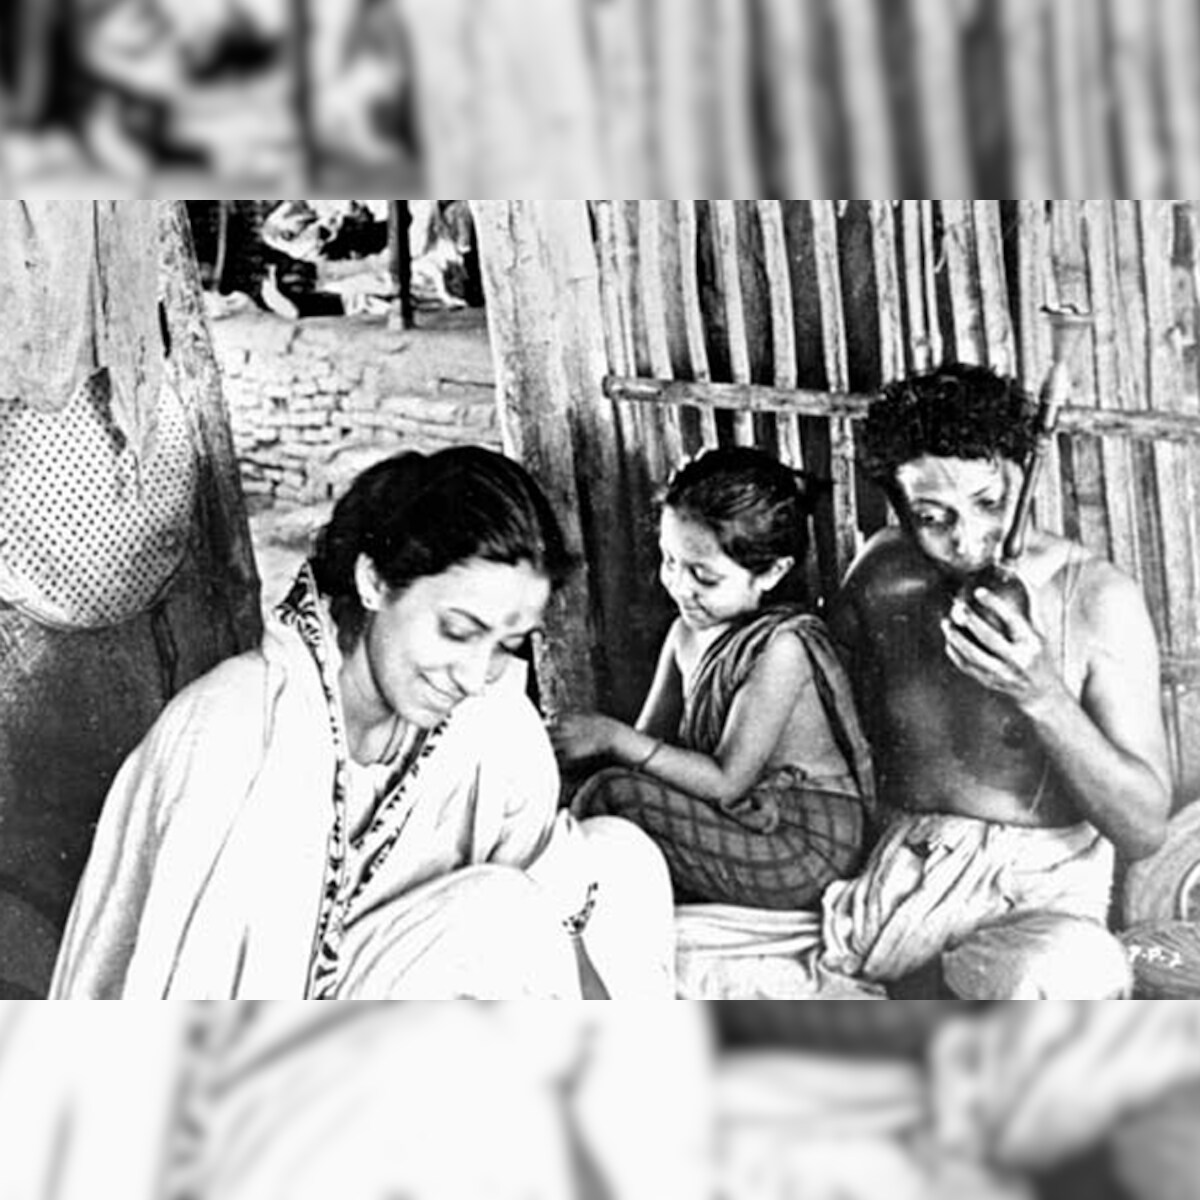 The Bengali Mother: Through Filmic Lenses